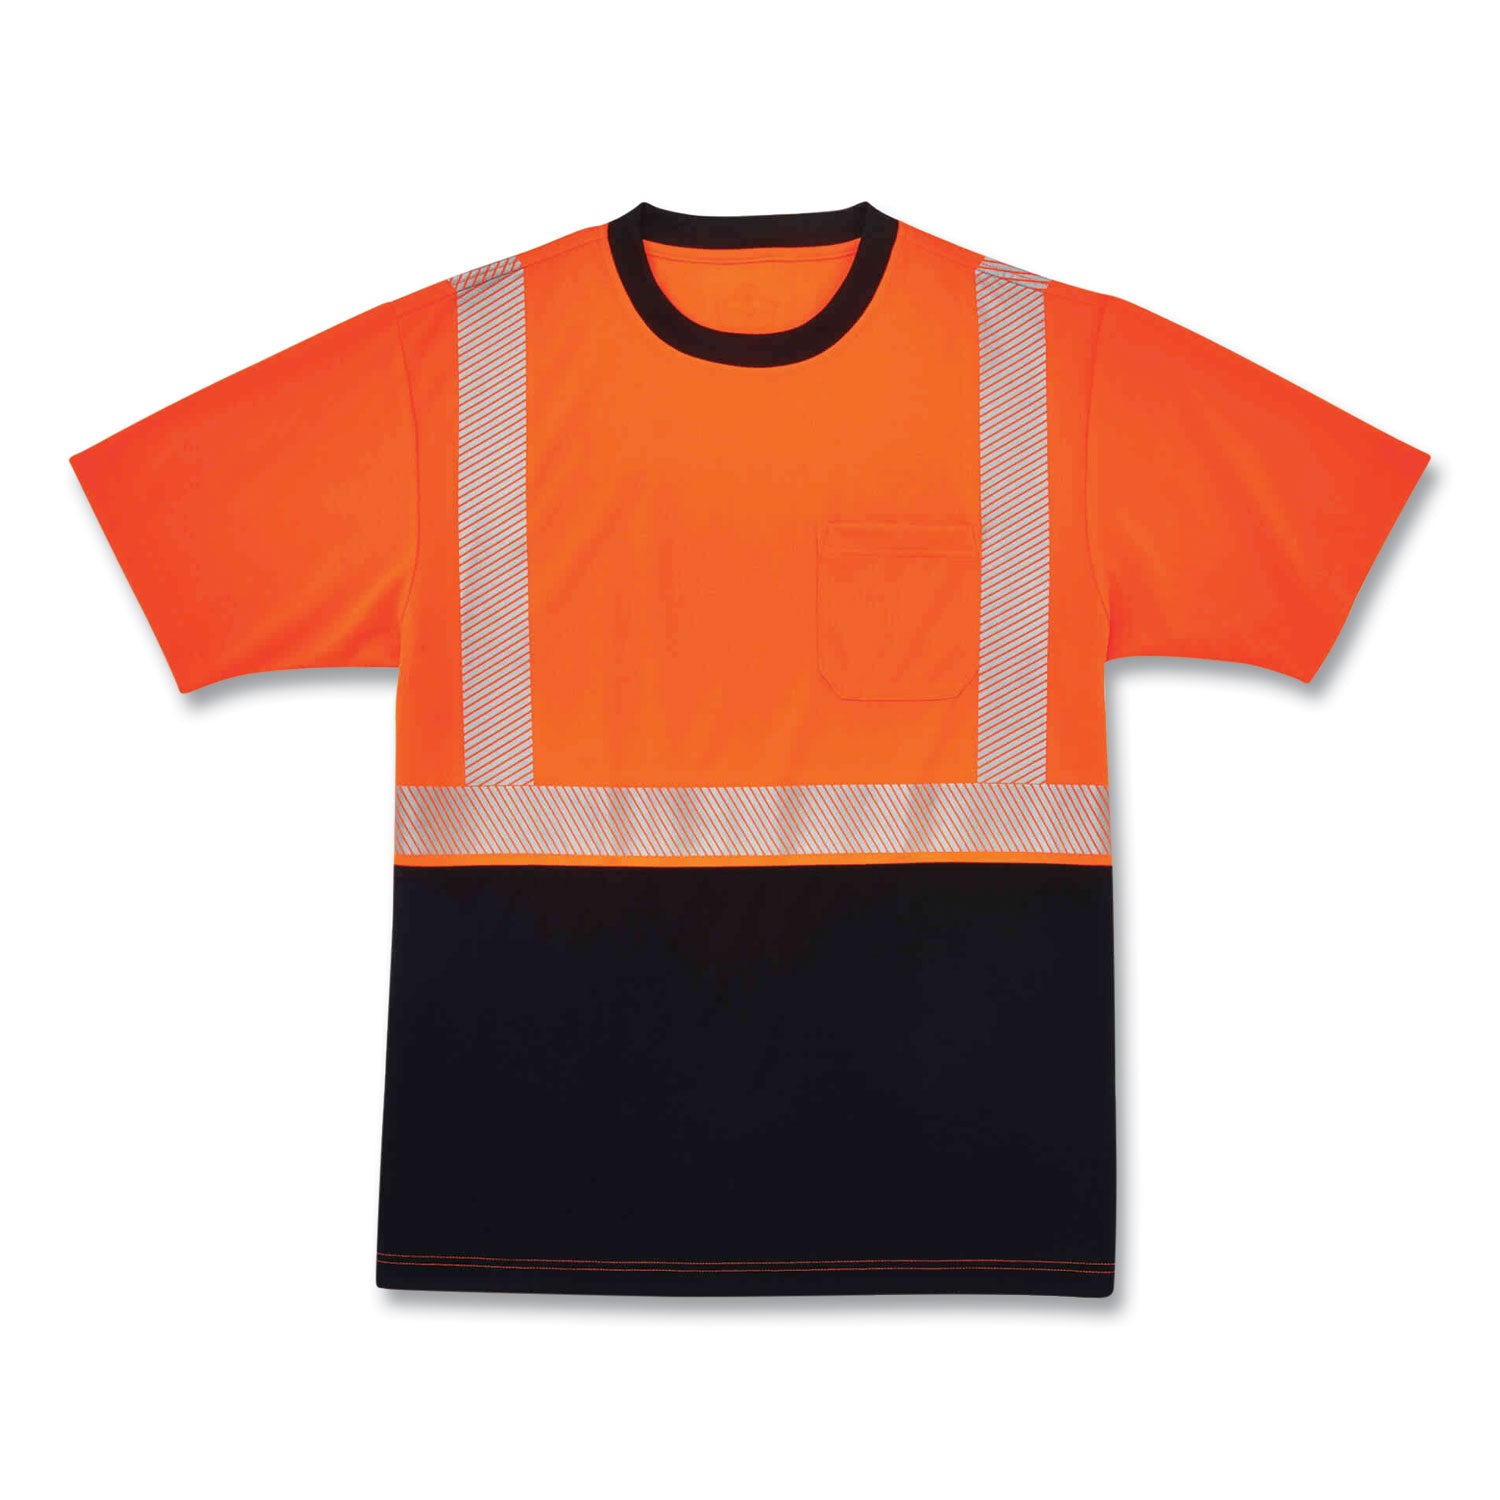 glowear-8280bk-class-2-performance-t-shirt-with-black-bottom-polyester-medium-orange-ships-in-1-3-business-days_ego22583 - 1